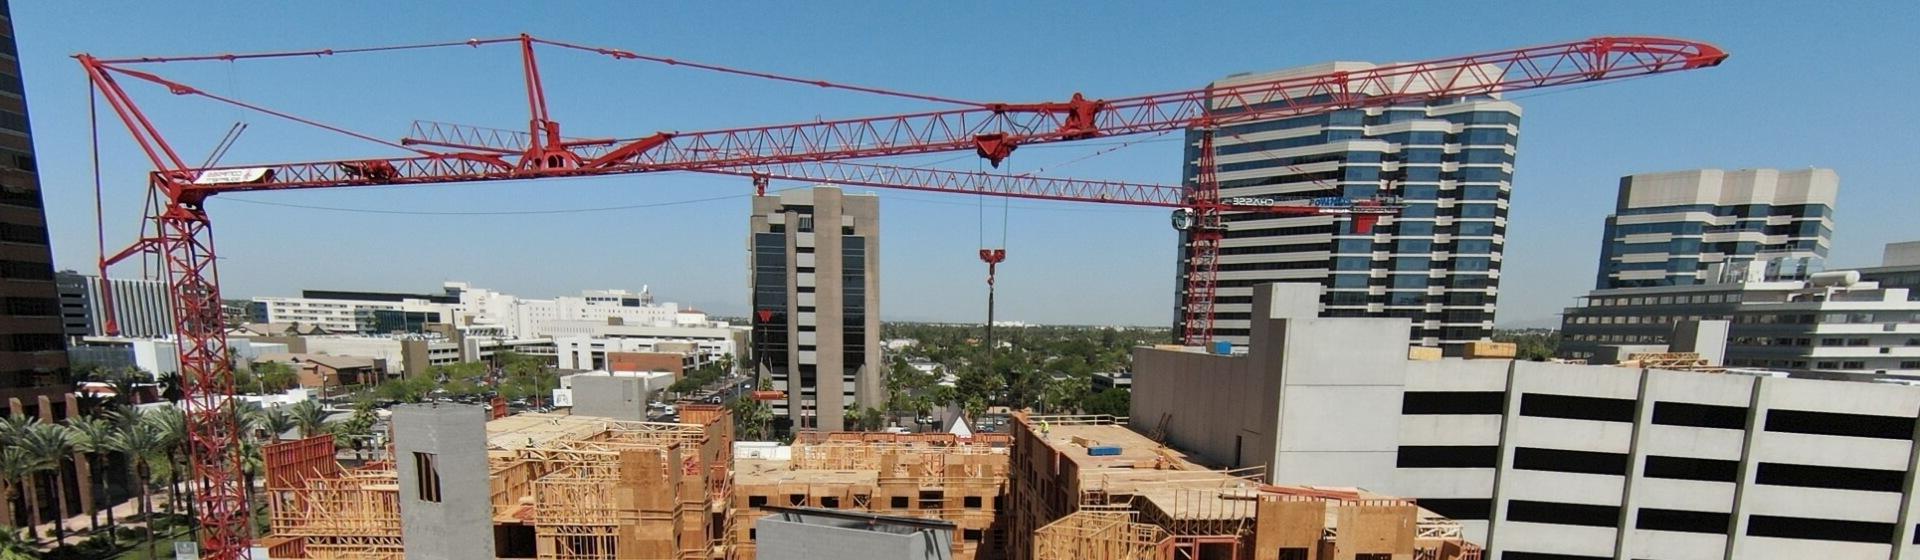 Potain-cranes-conquer-jobsite-with-footprint-restrictions-at-downtown-Phoenix-development-03.jpg